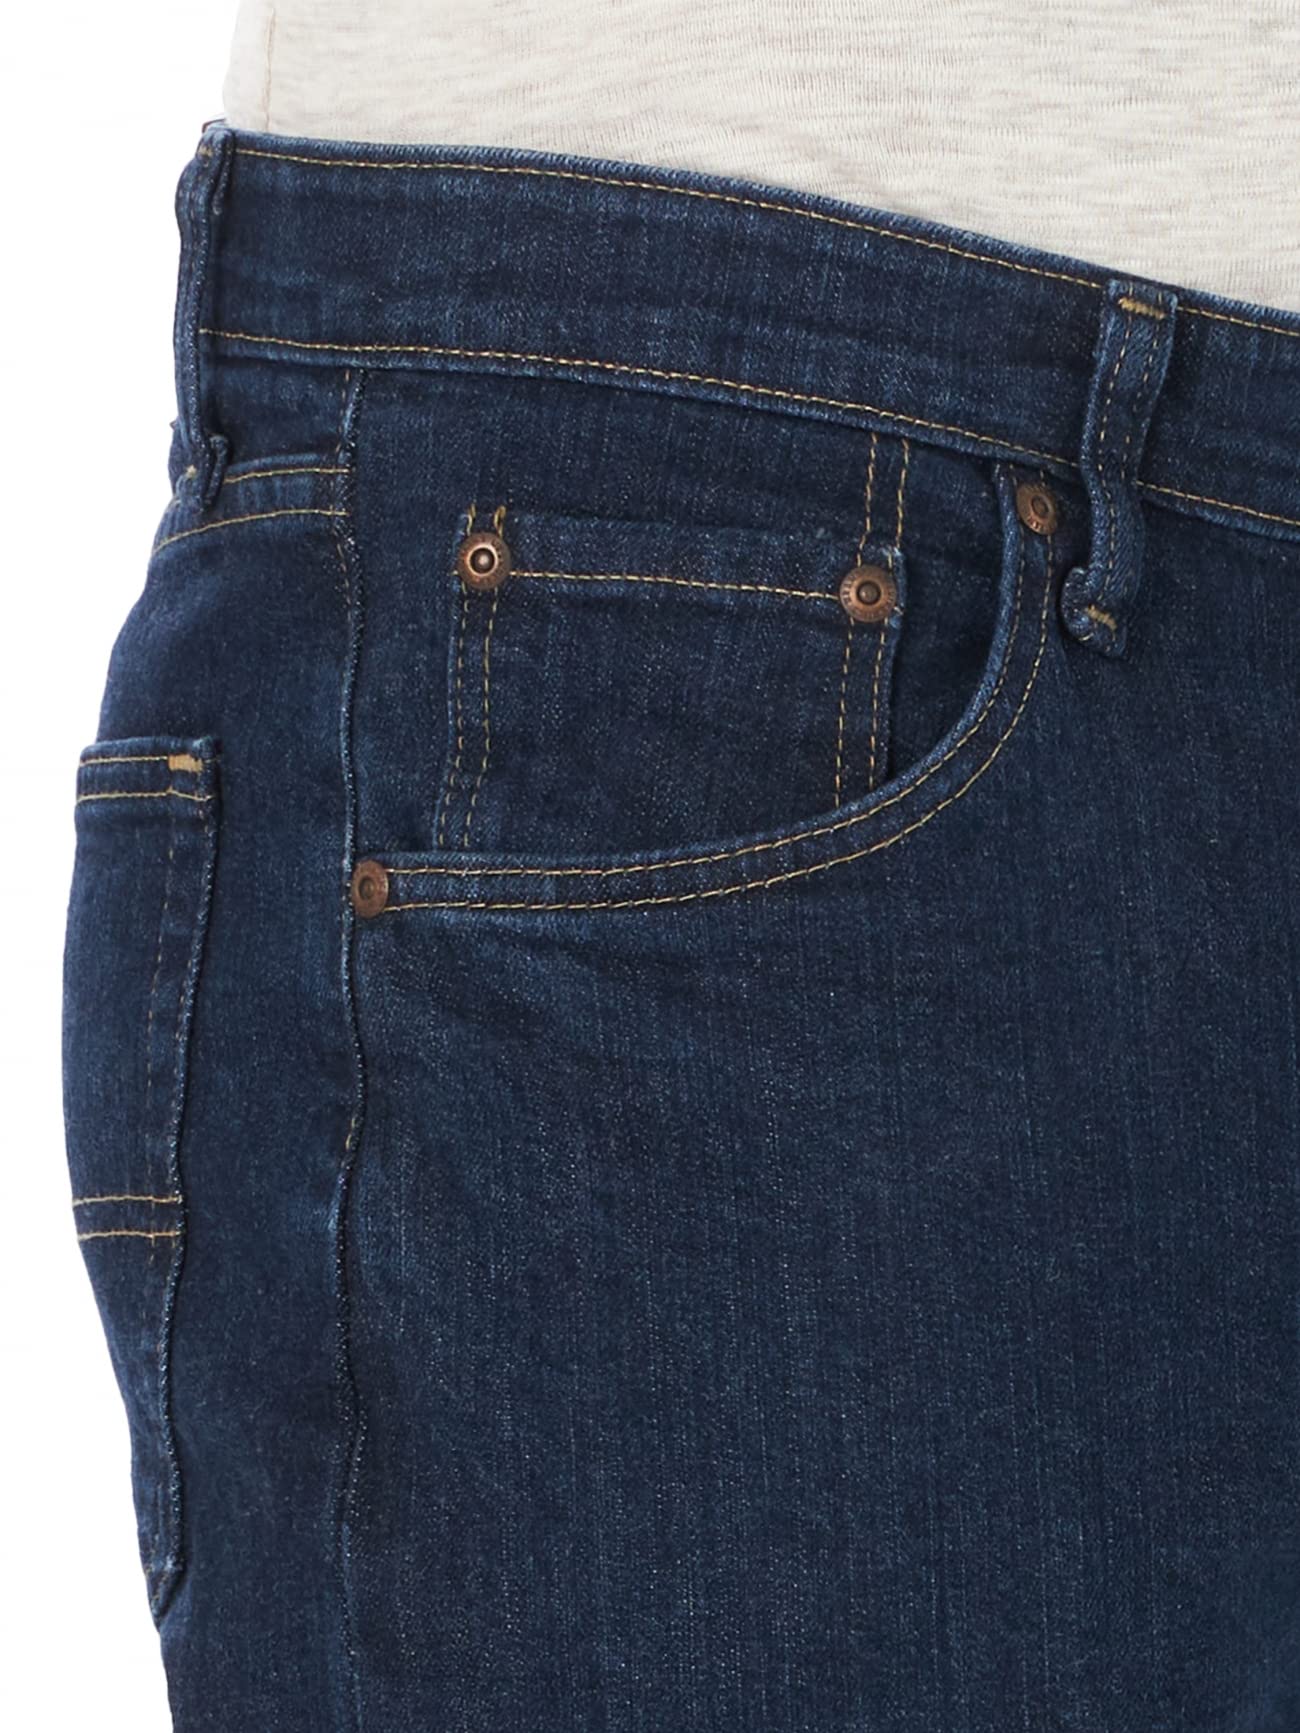 Wrangler Authentics Men's Regular Fit Comfort Flex Waist Jean, Dark Indigo, 33W x 32L